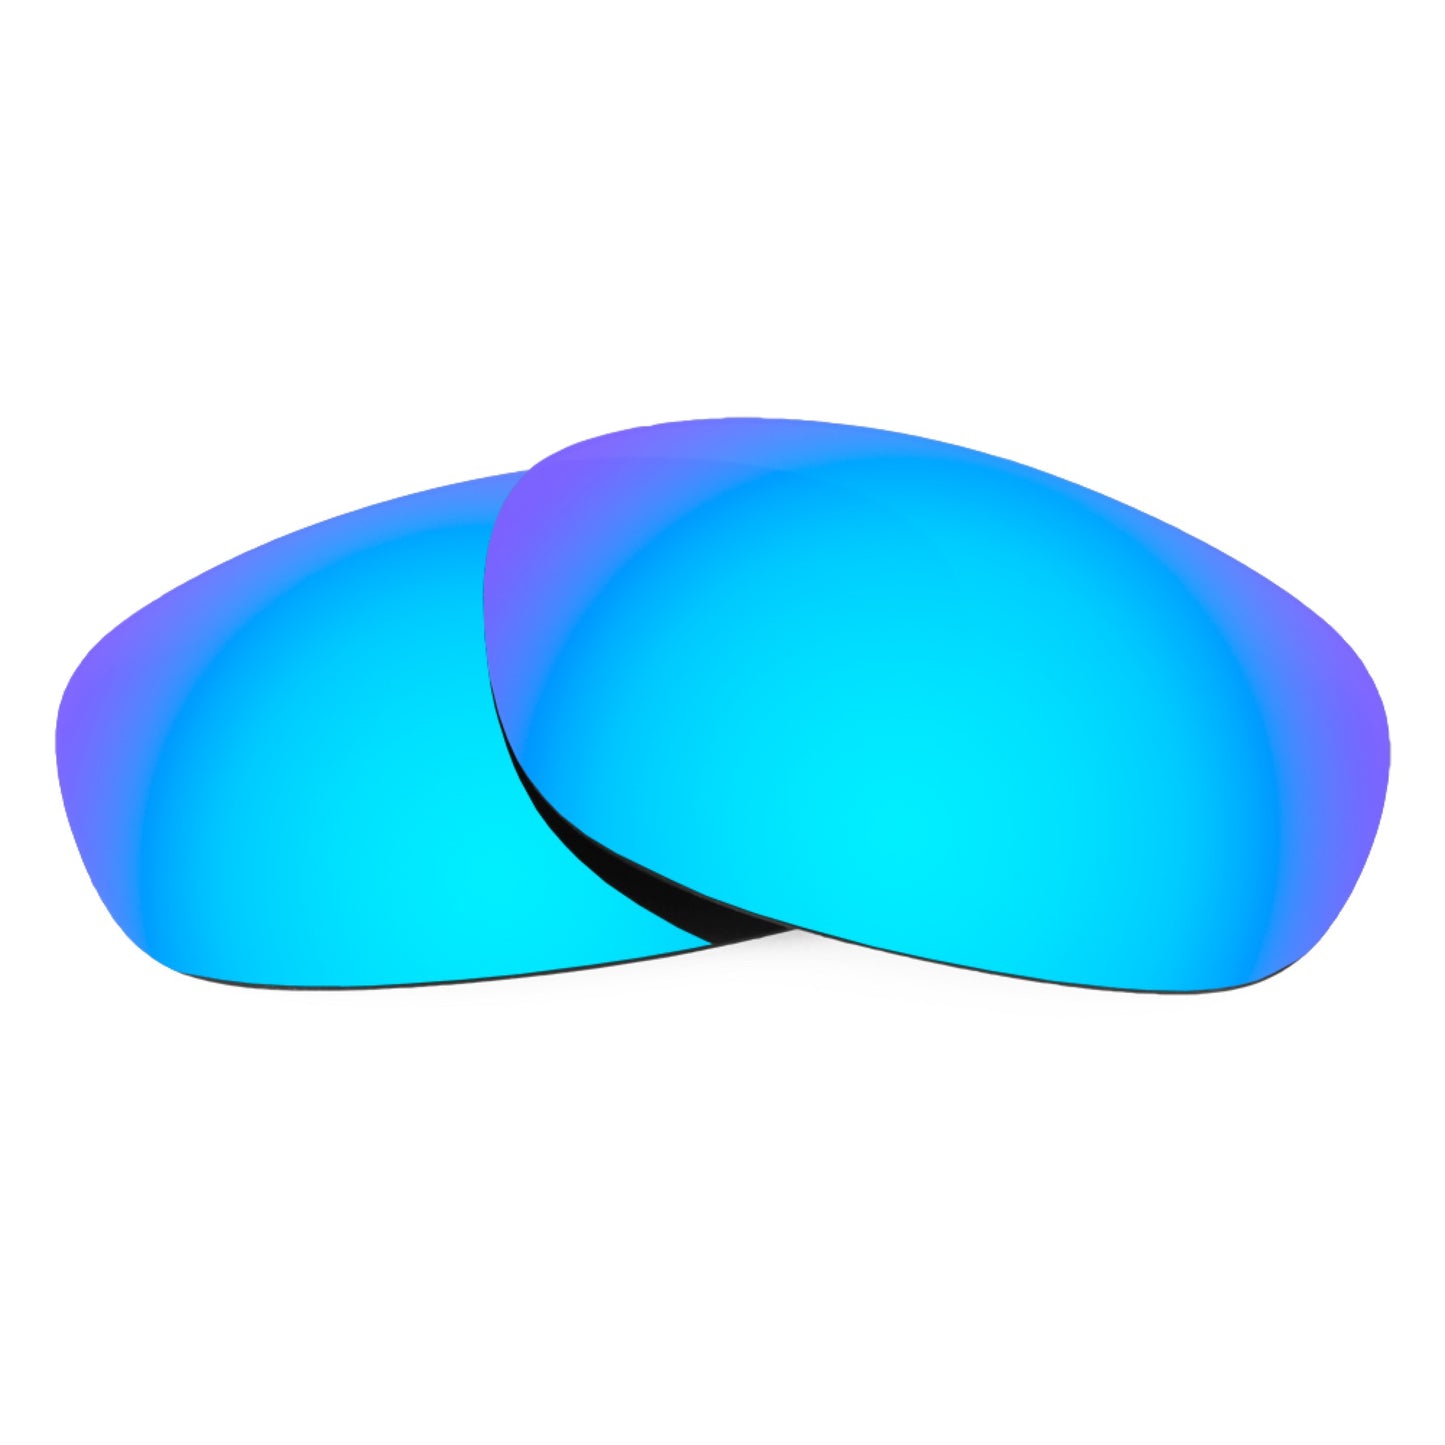 Revant replacement lenses for Spy Optic Genre Non-Polarized Ice Blue